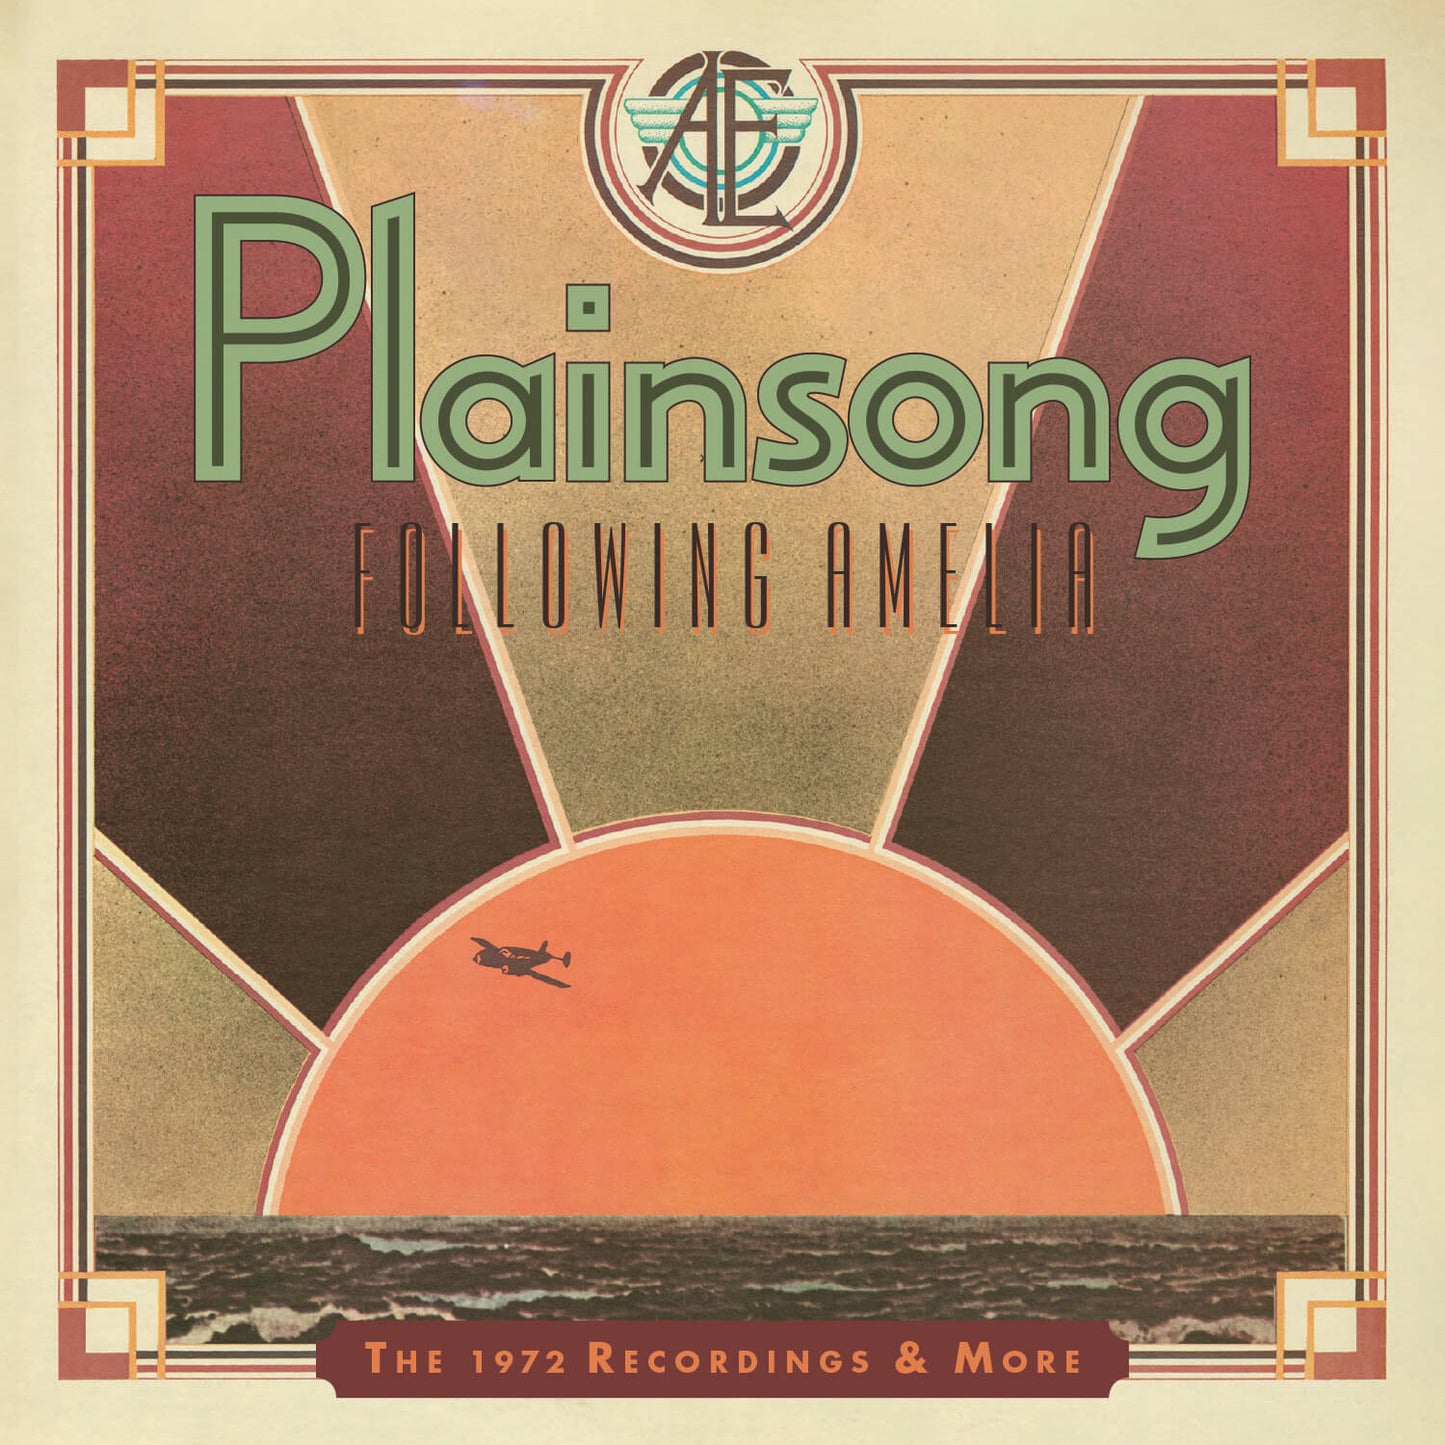 6CD - Plainsong - Following Amelia